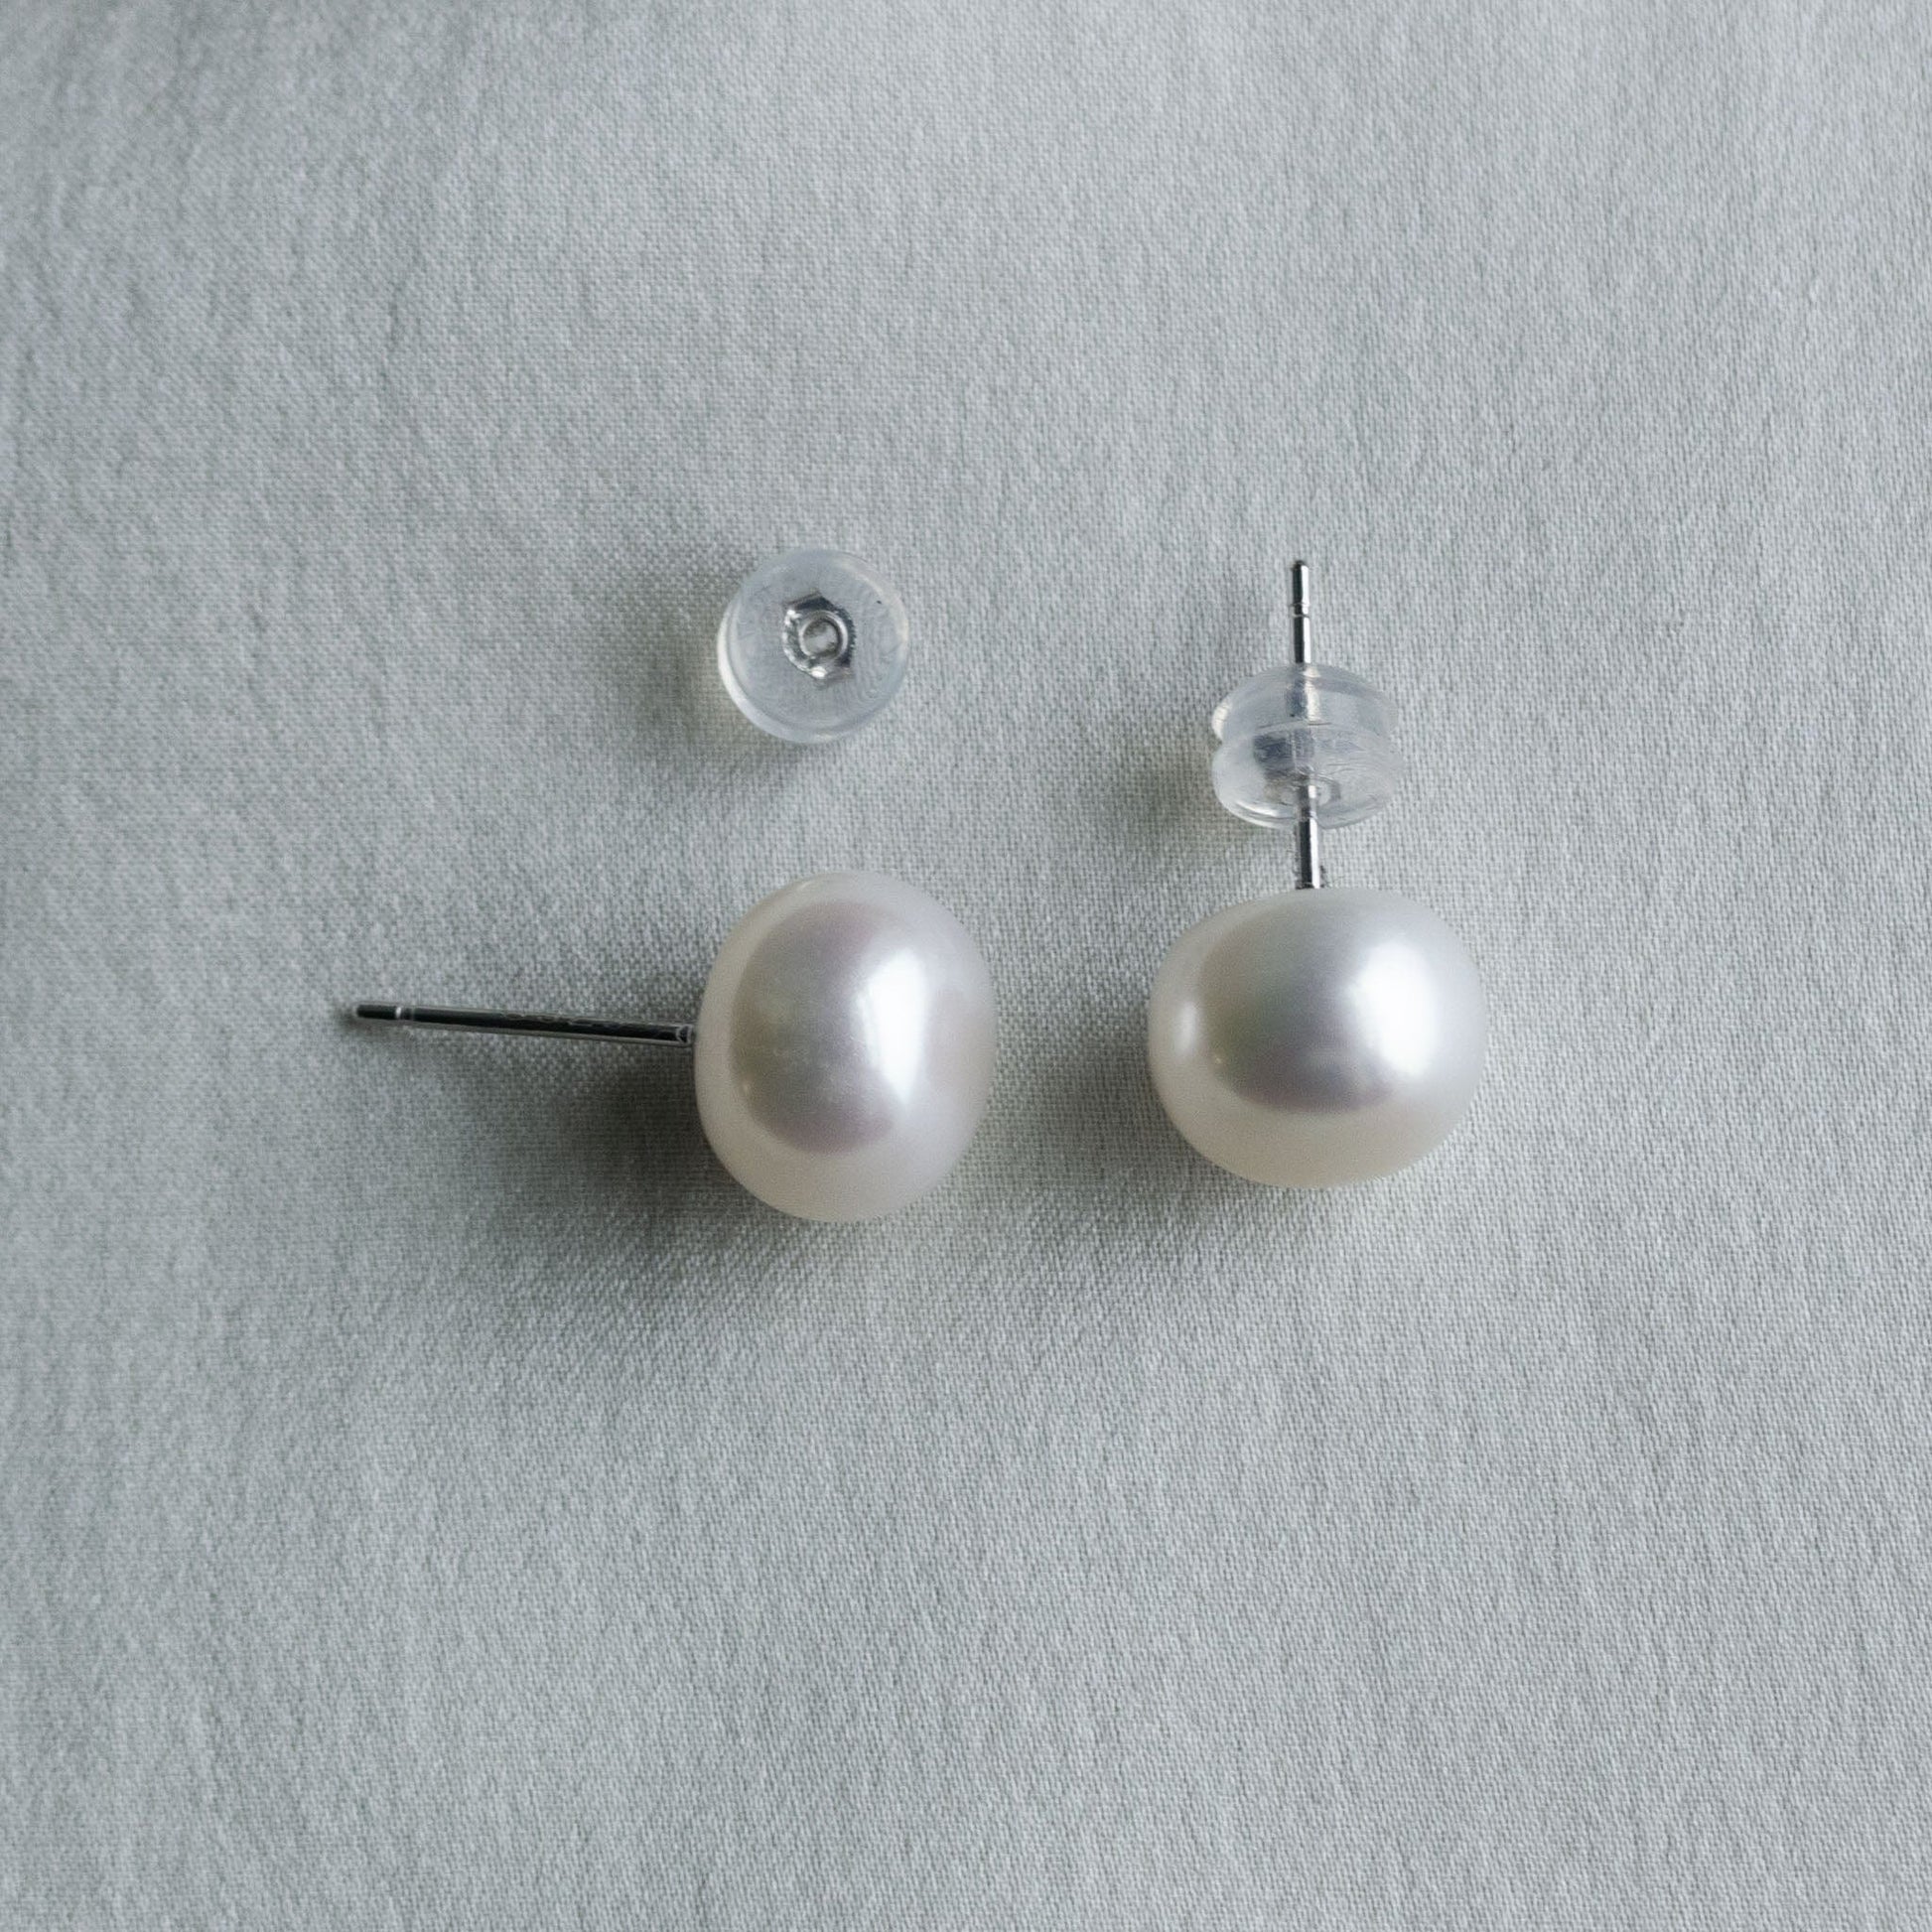 Arbor Trading Post Earrings Arbor Trading Post Large Freshwater White Pearl Stud Earrings - 9 mm Pearls, 925 Sterling Silver